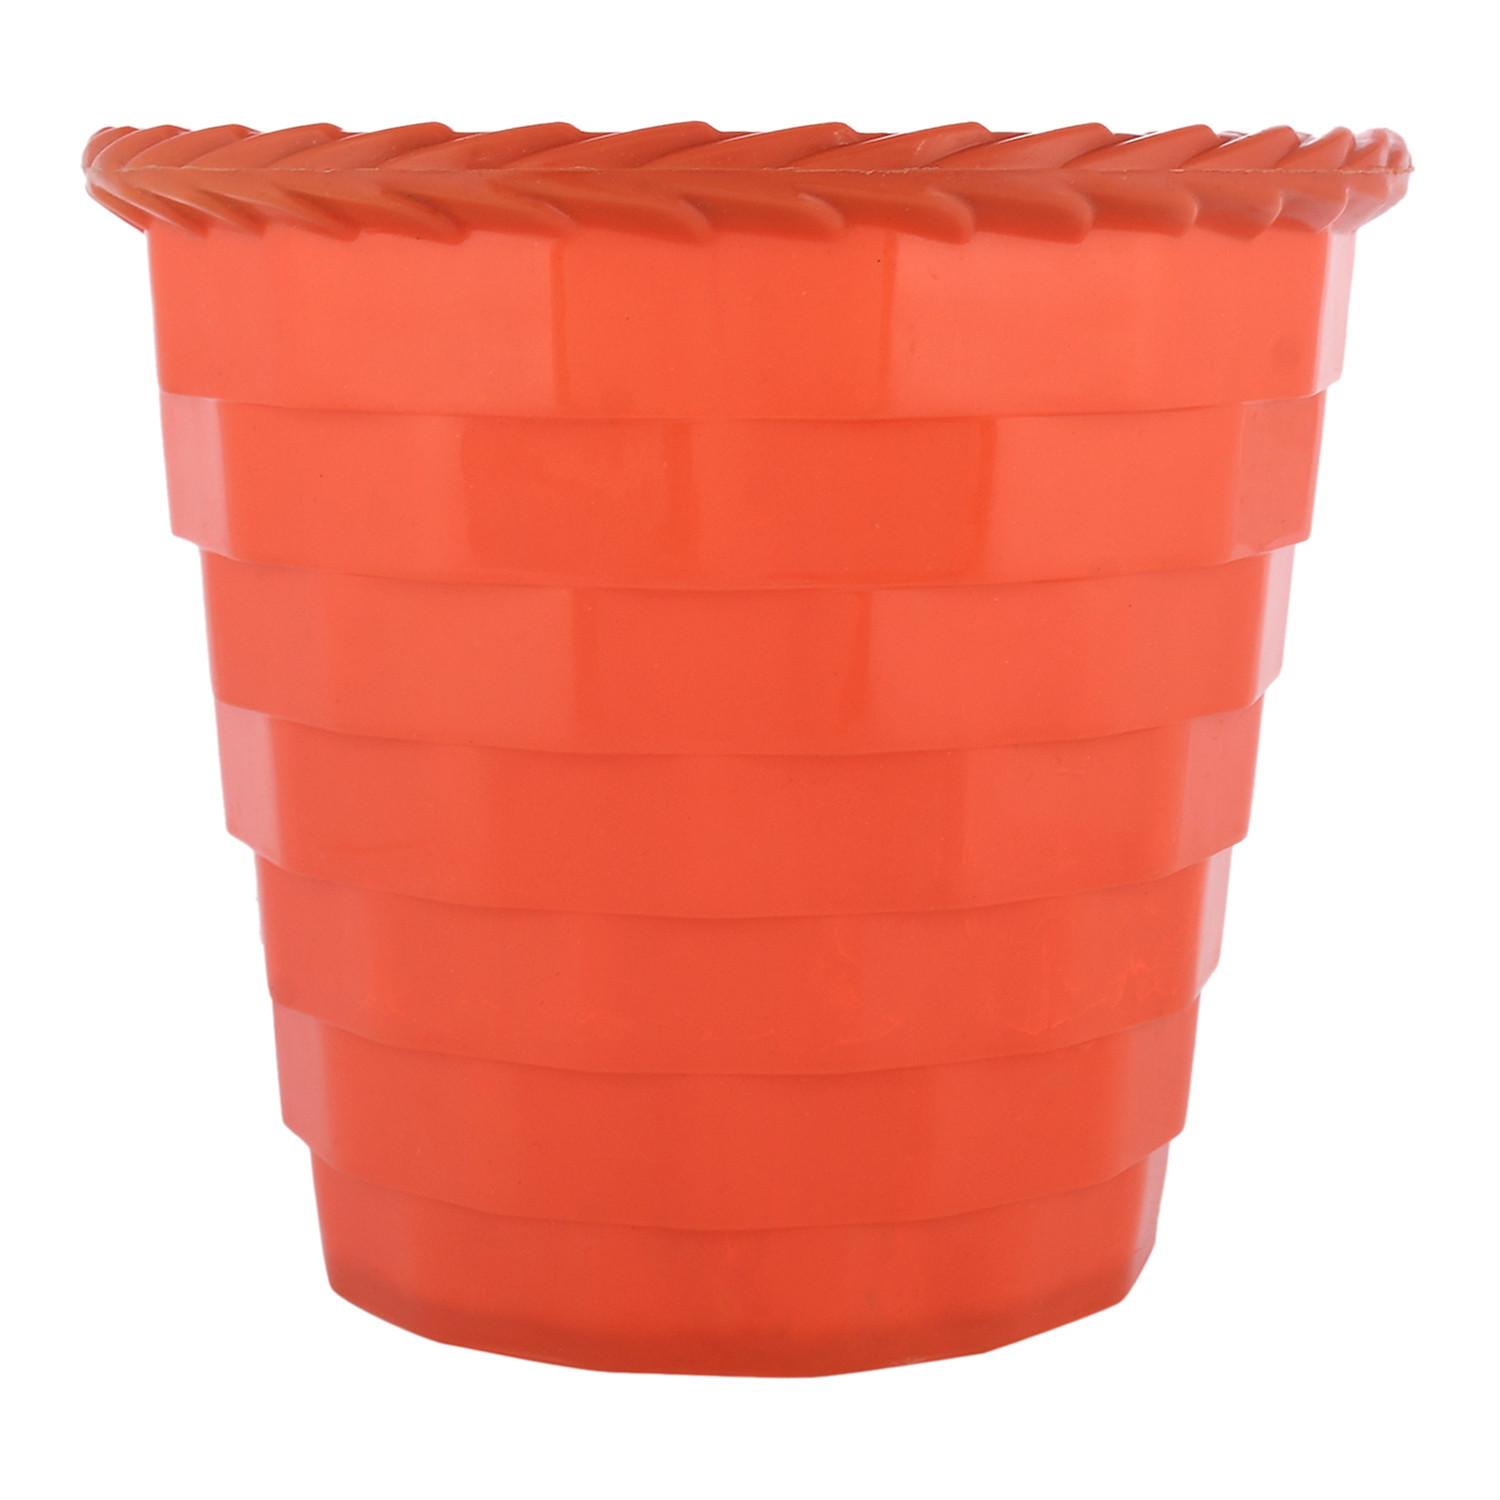 Kuber Industries Brick Flower Pot|Durable Plastic Flower Pots|Planters for Home Décor|Garden|Living Room|Balcony|8 Inch|Pack of 2 (Orange & Golden)